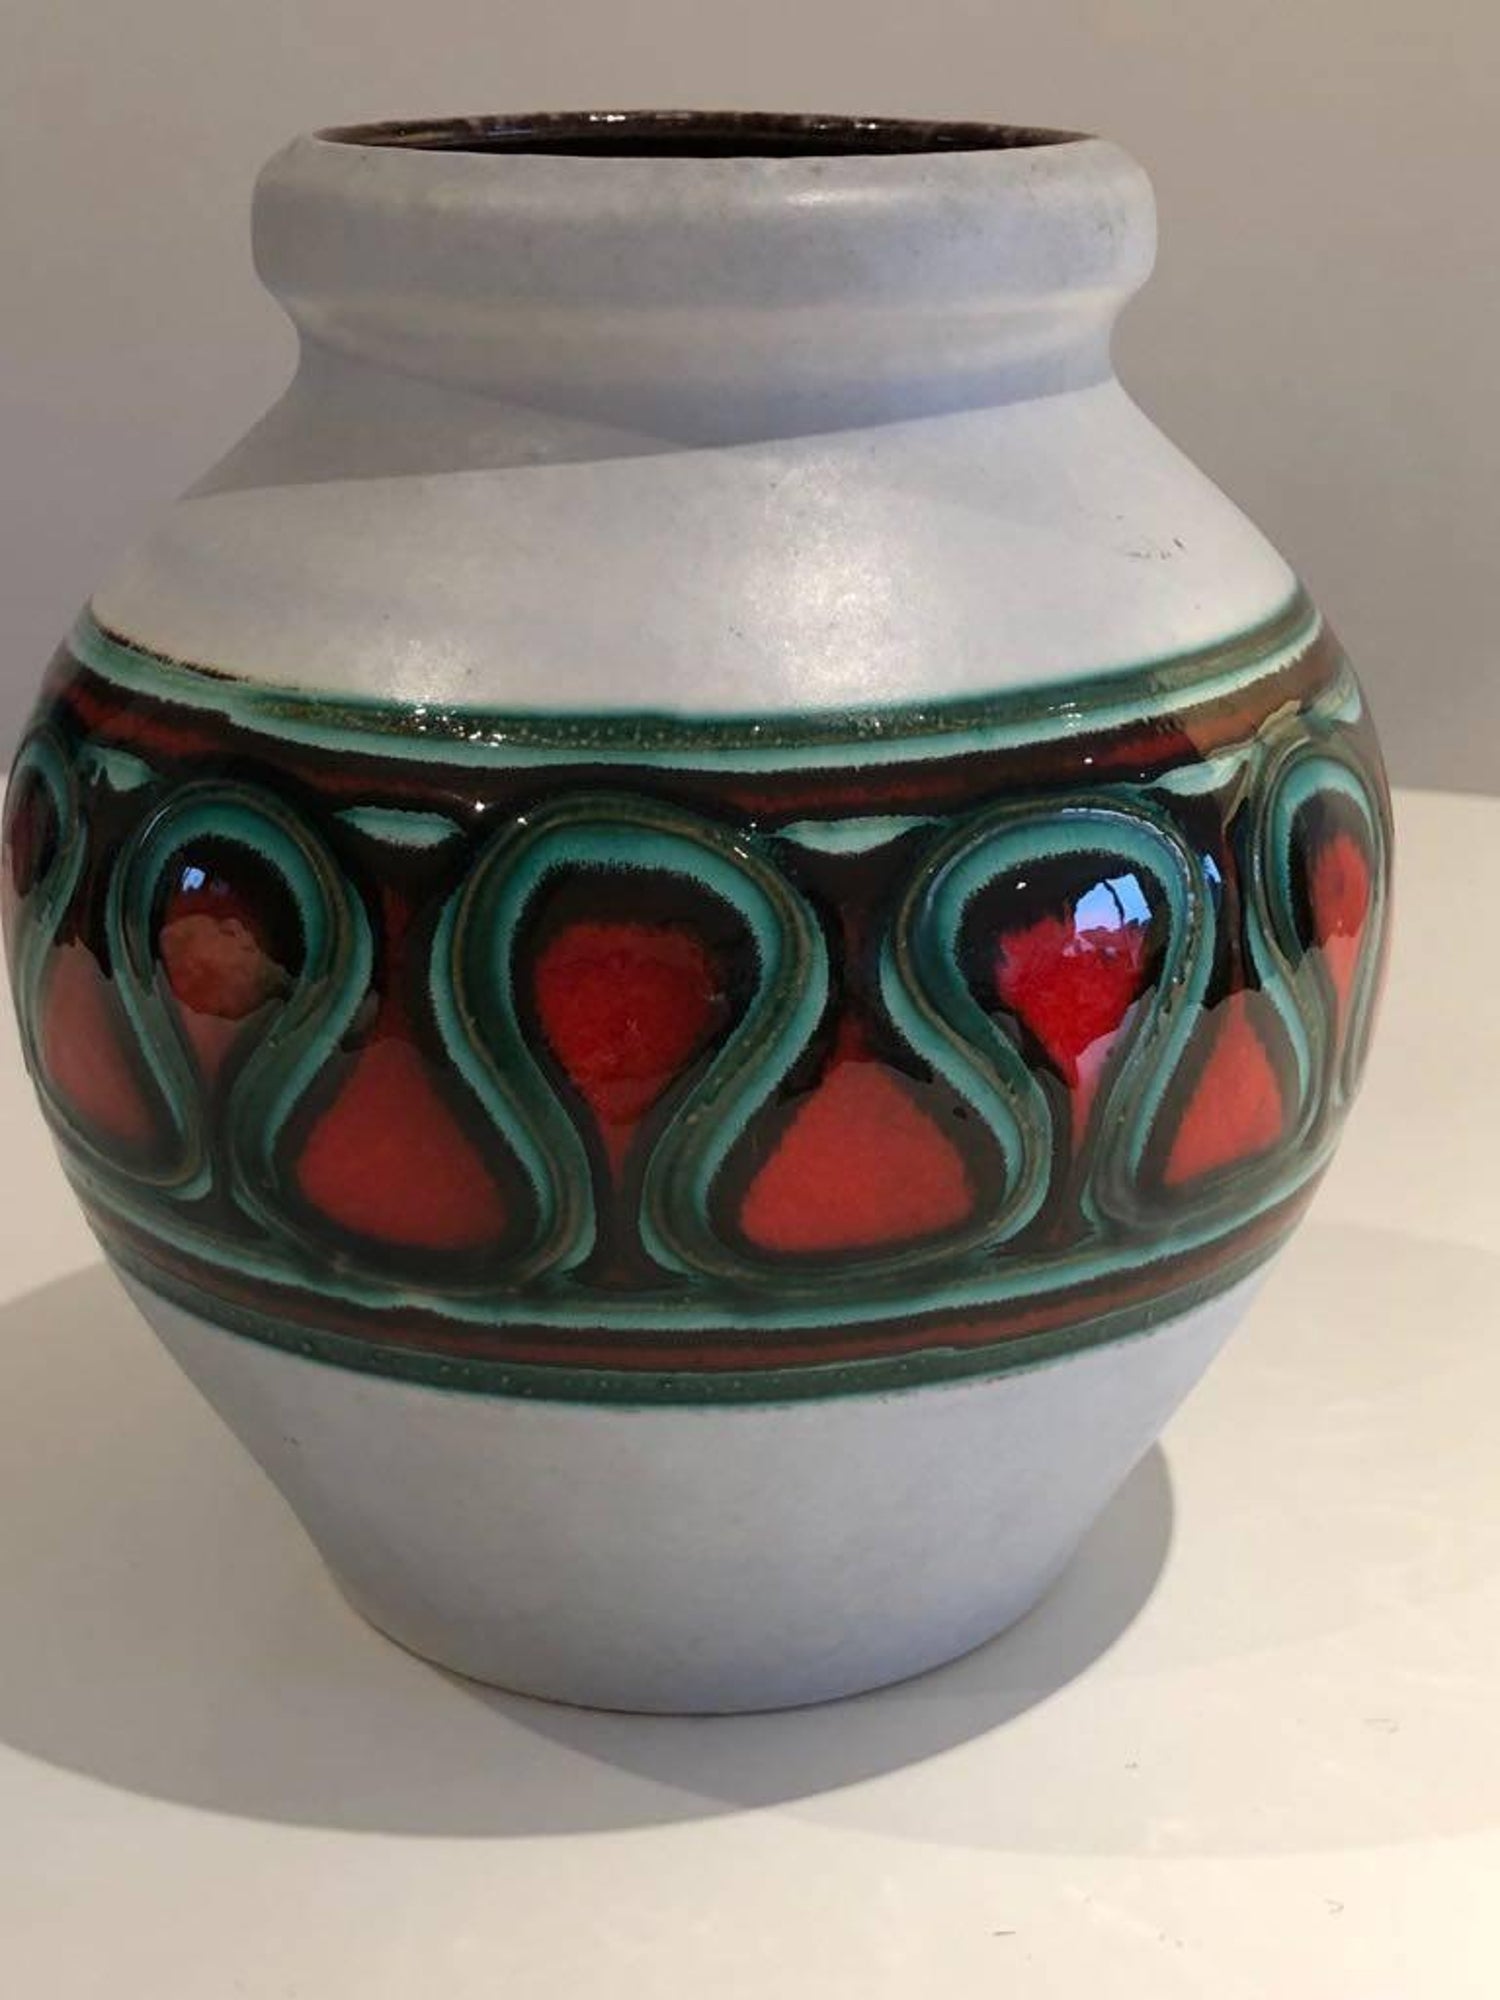 20th Century Vintage West German Bay Keramik Vase For Sale at 1stdibs